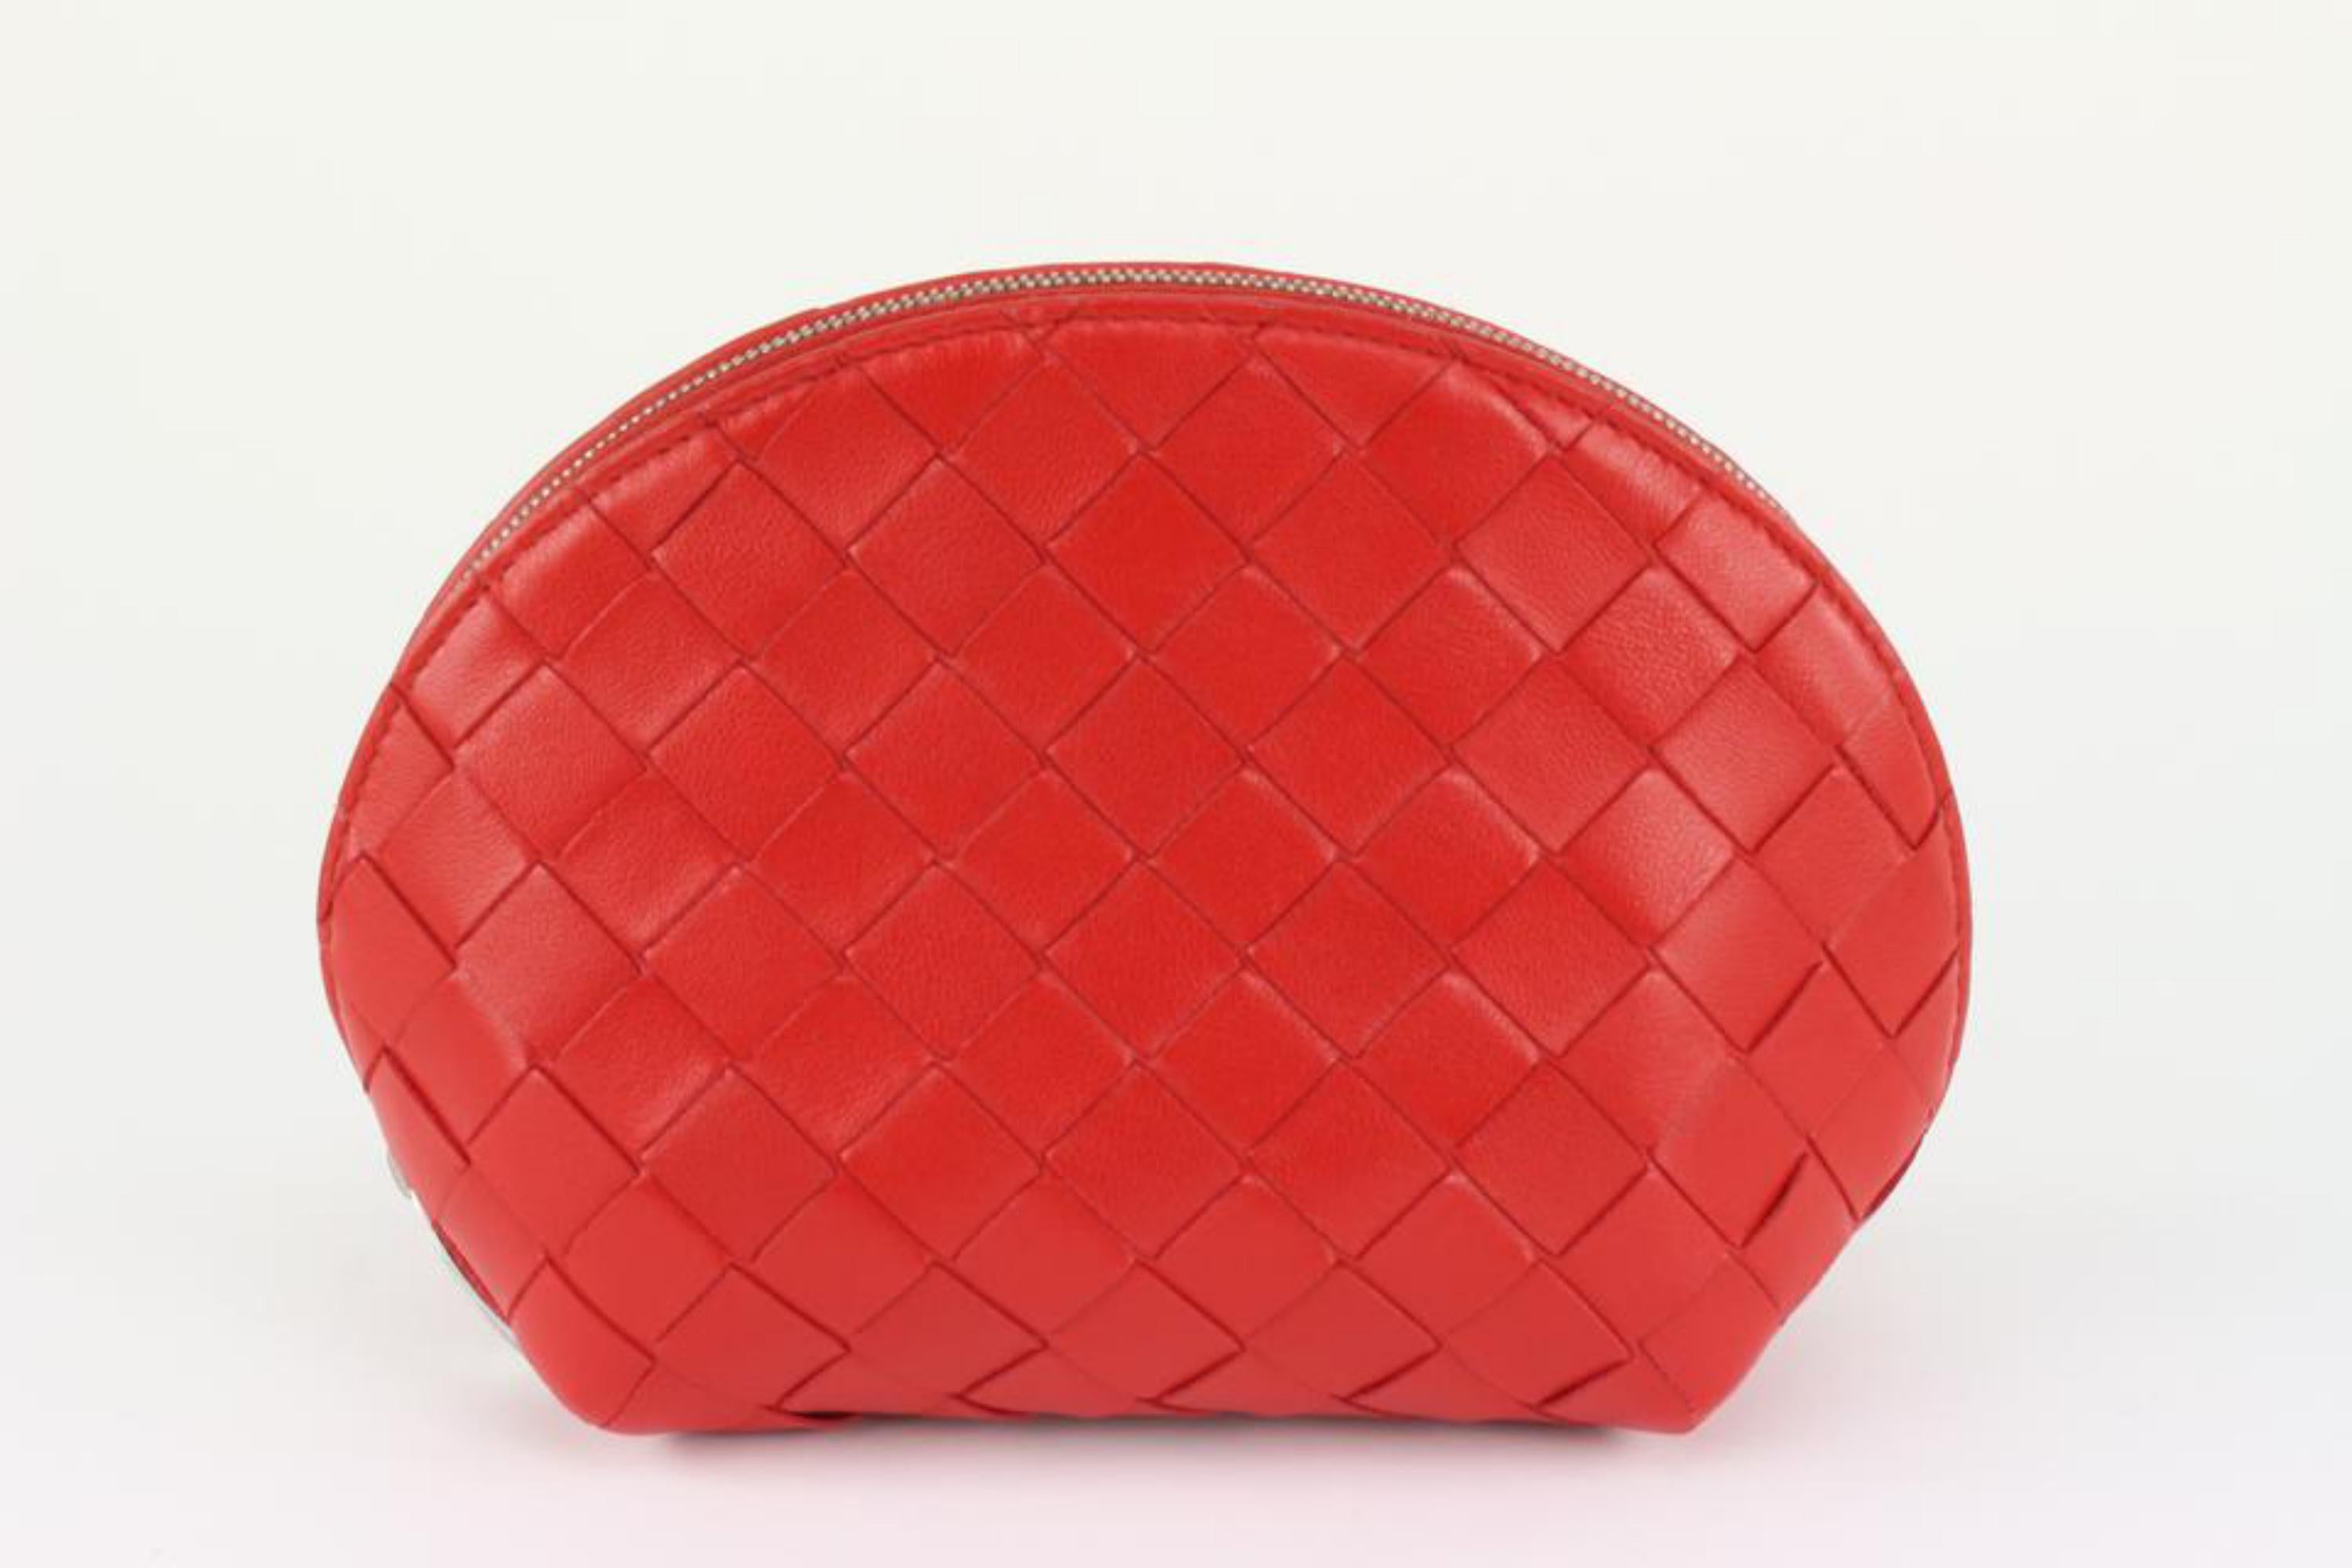 Bottega Veneta Red Intrecciato Leather Oval Cosmetic Pouch Toiletry Case 1123bv3 For Sale 2